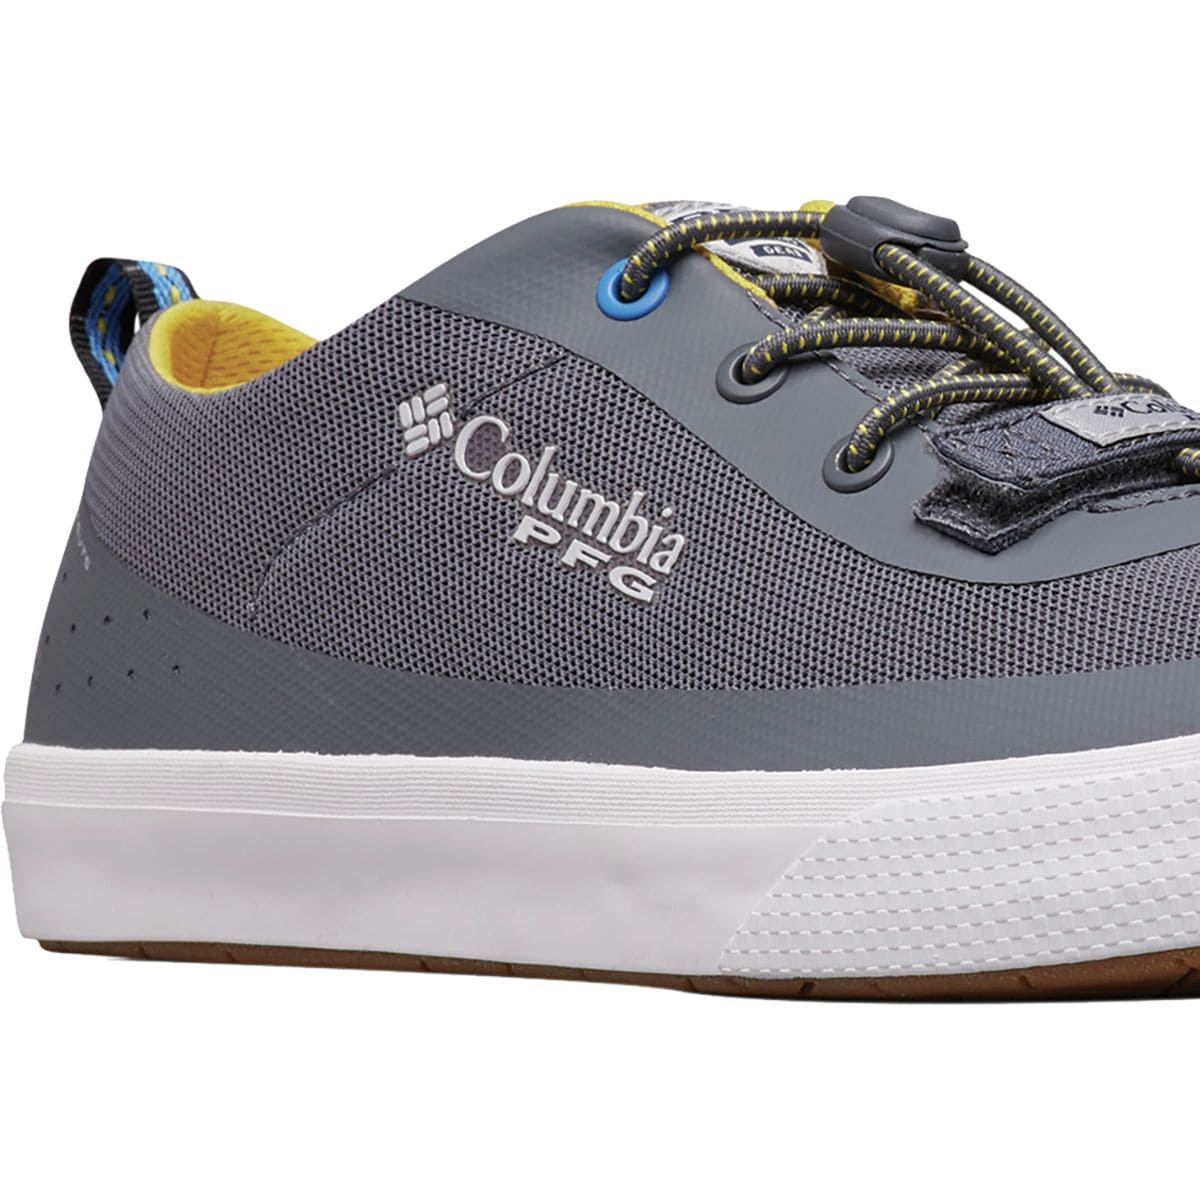 Columbia Dorado CVO PFG Shoe - Men's - Footwear